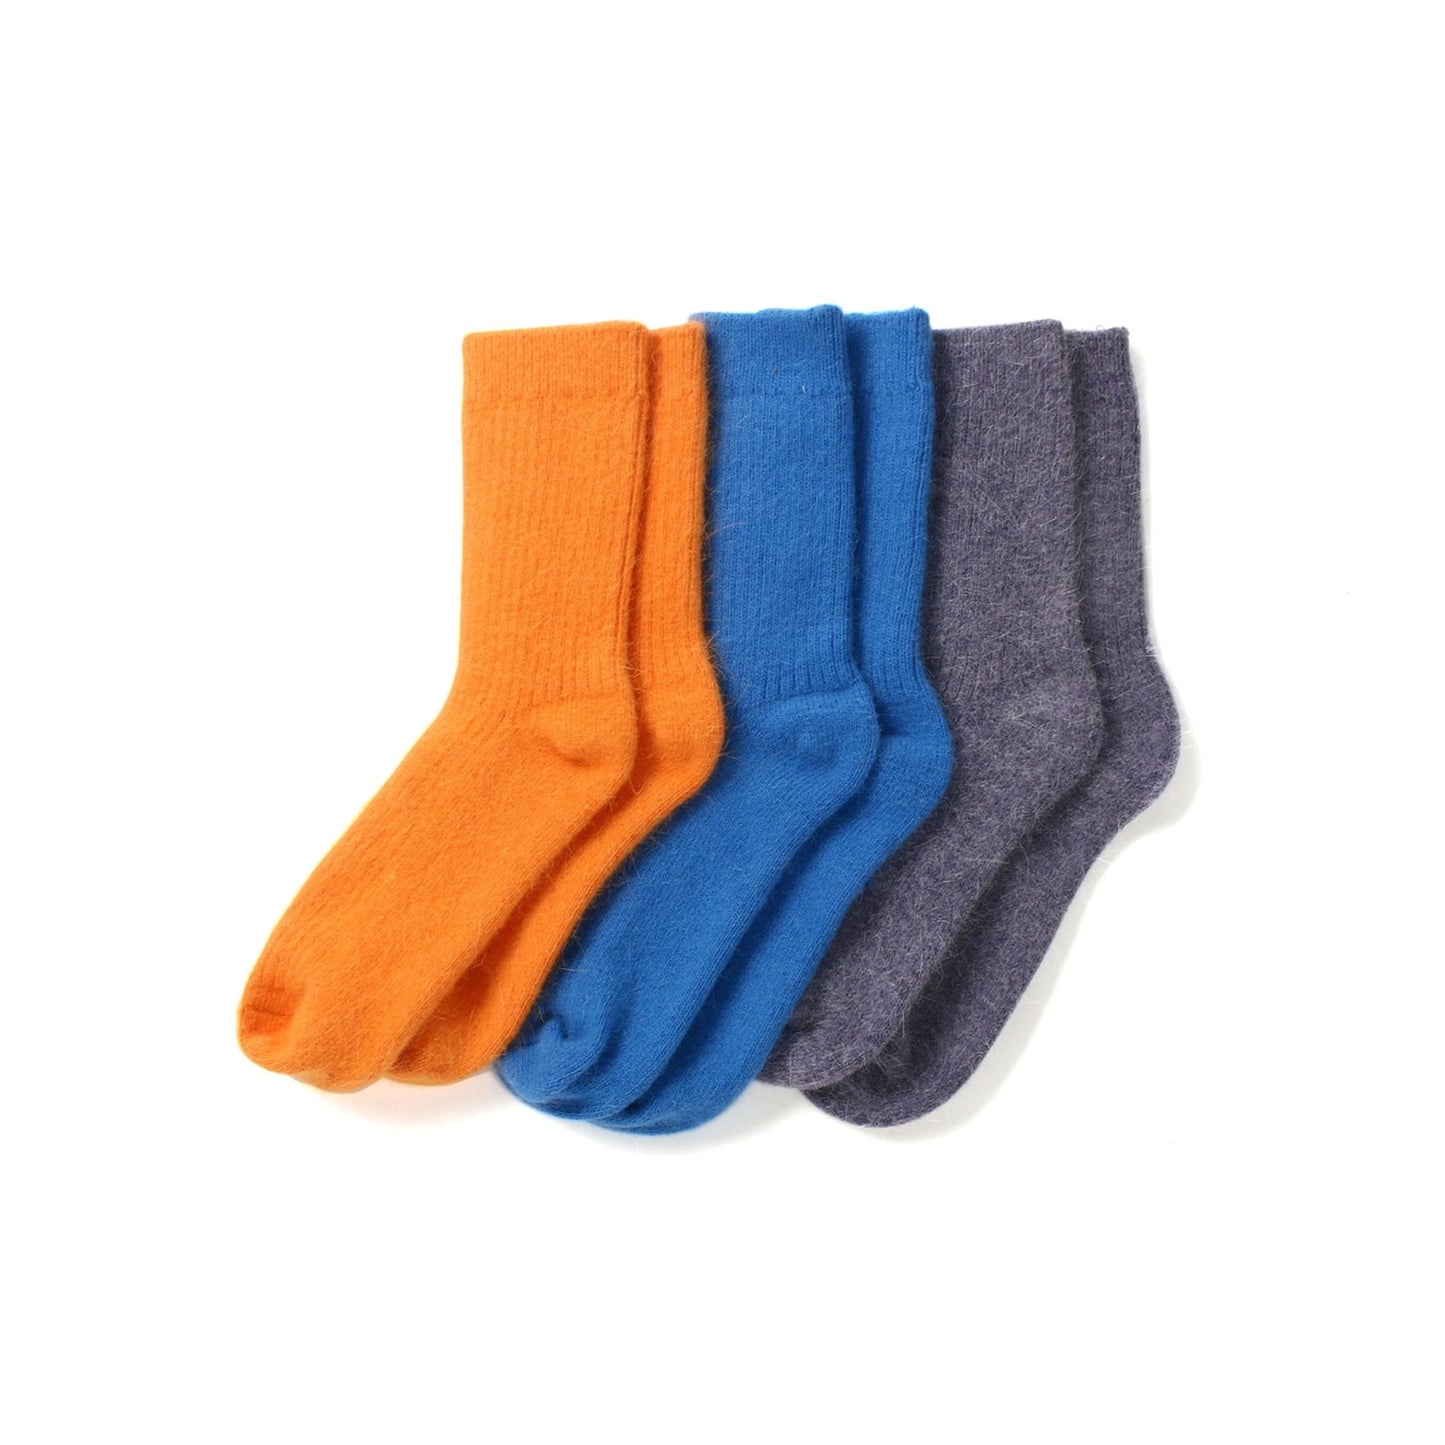 Cashmere Wool Socks, Set of 3